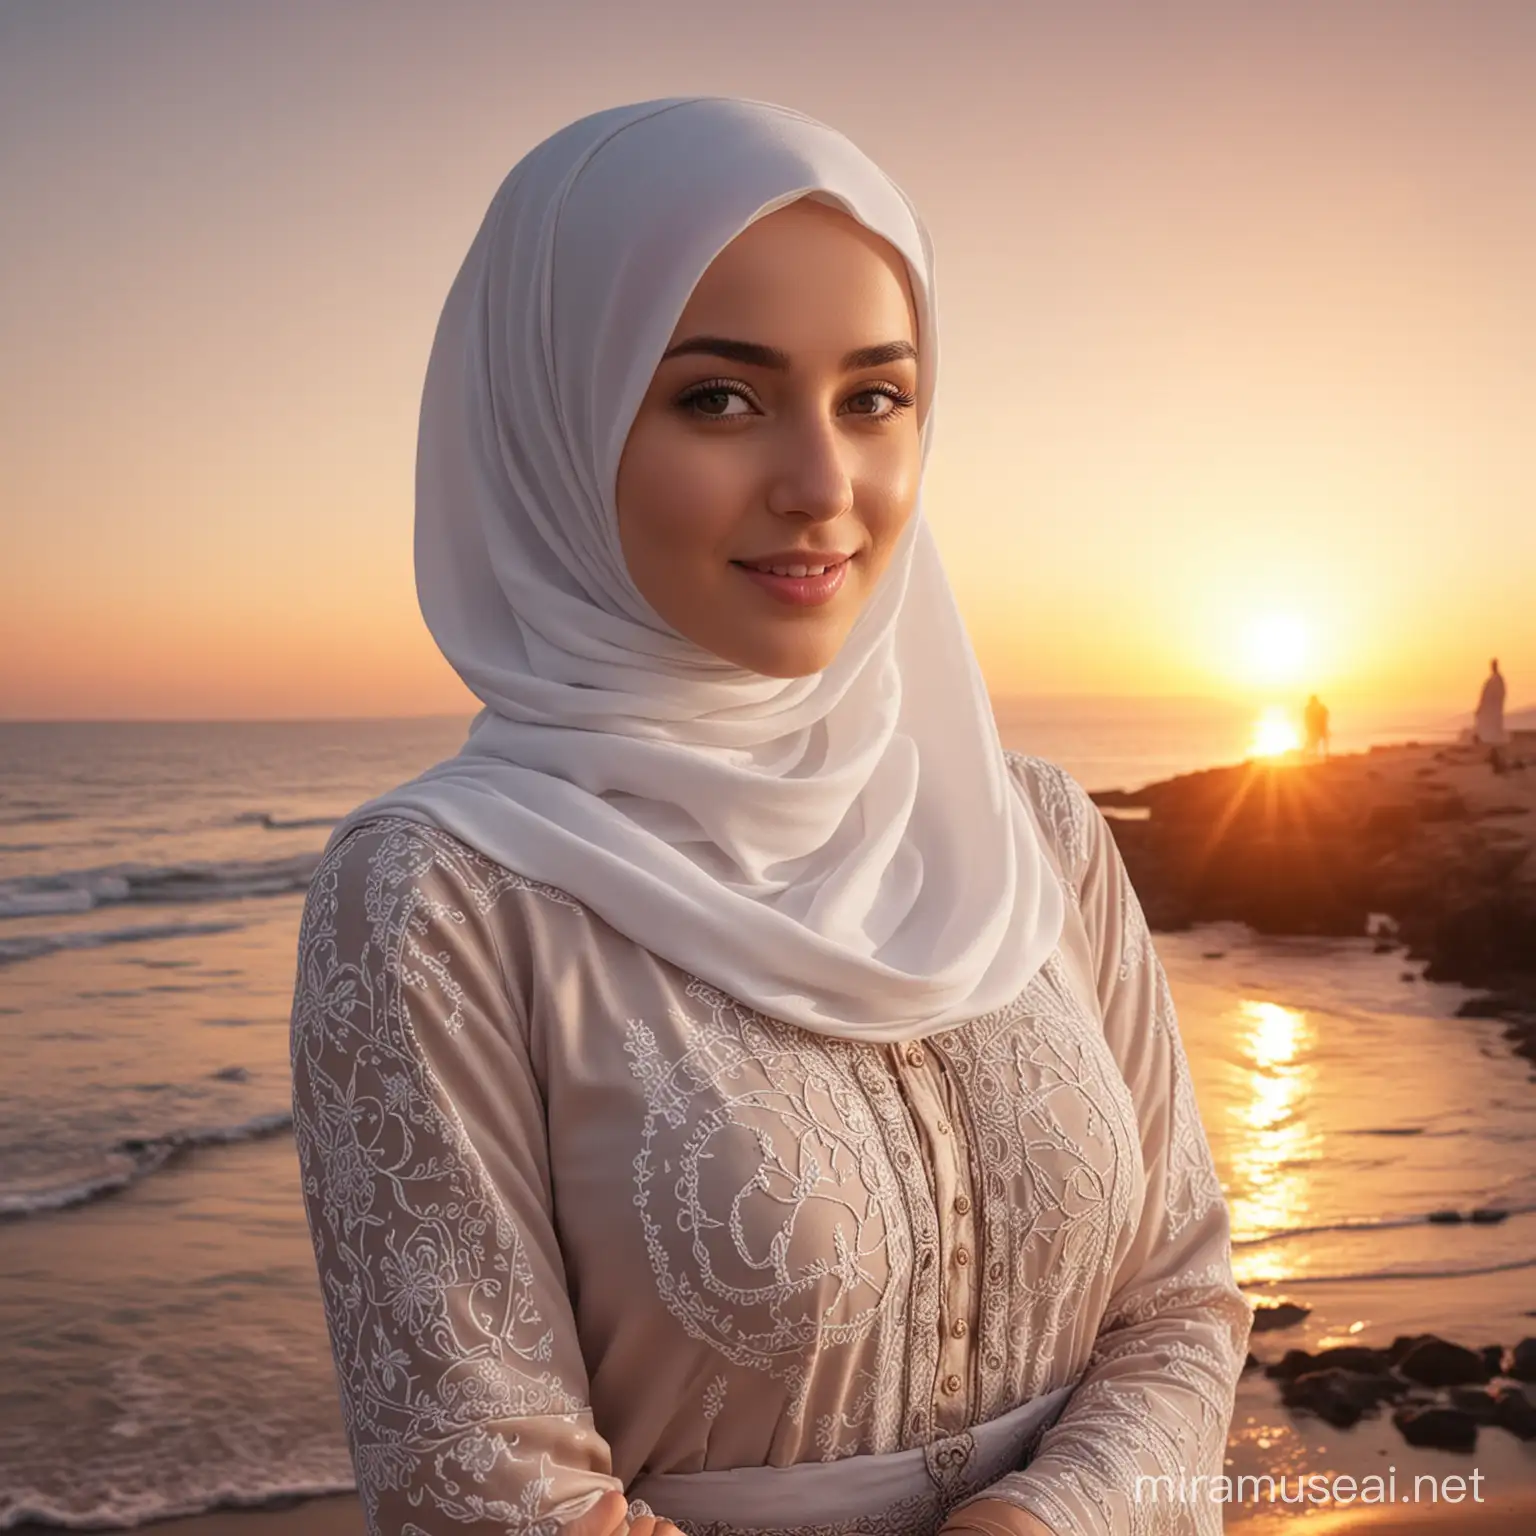 Elegant Hijab Fashion Model at Sunset Coast Stunning Beauty in Islamic Attire